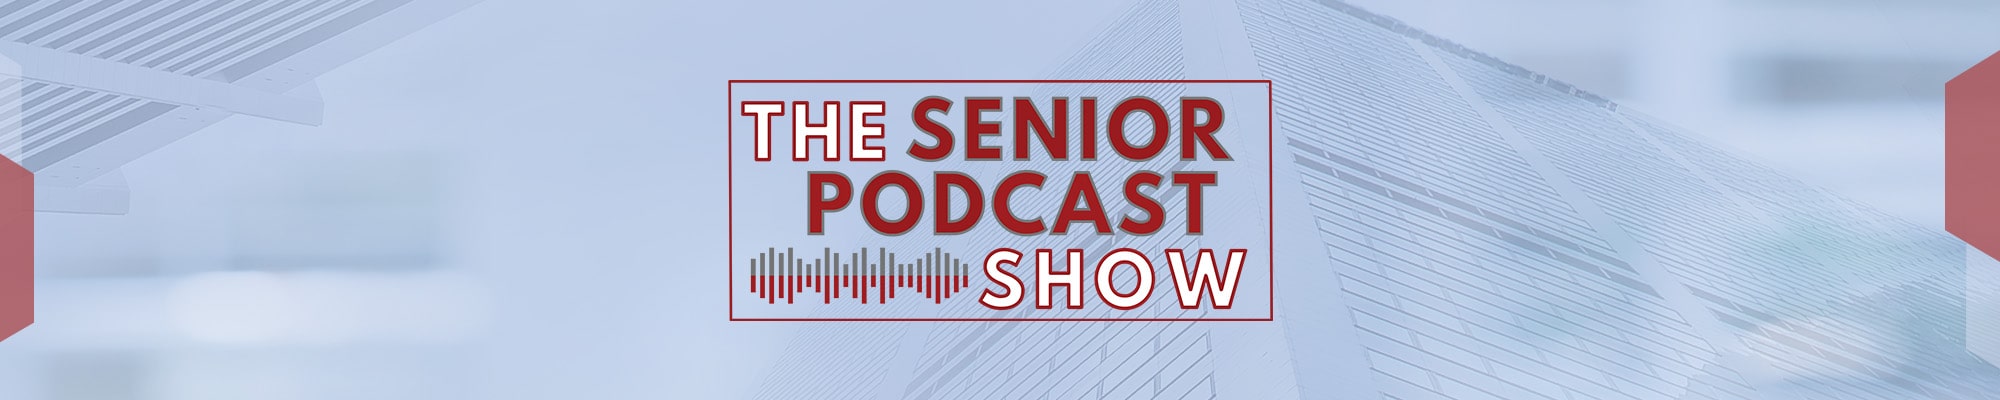 The Senior Podcast